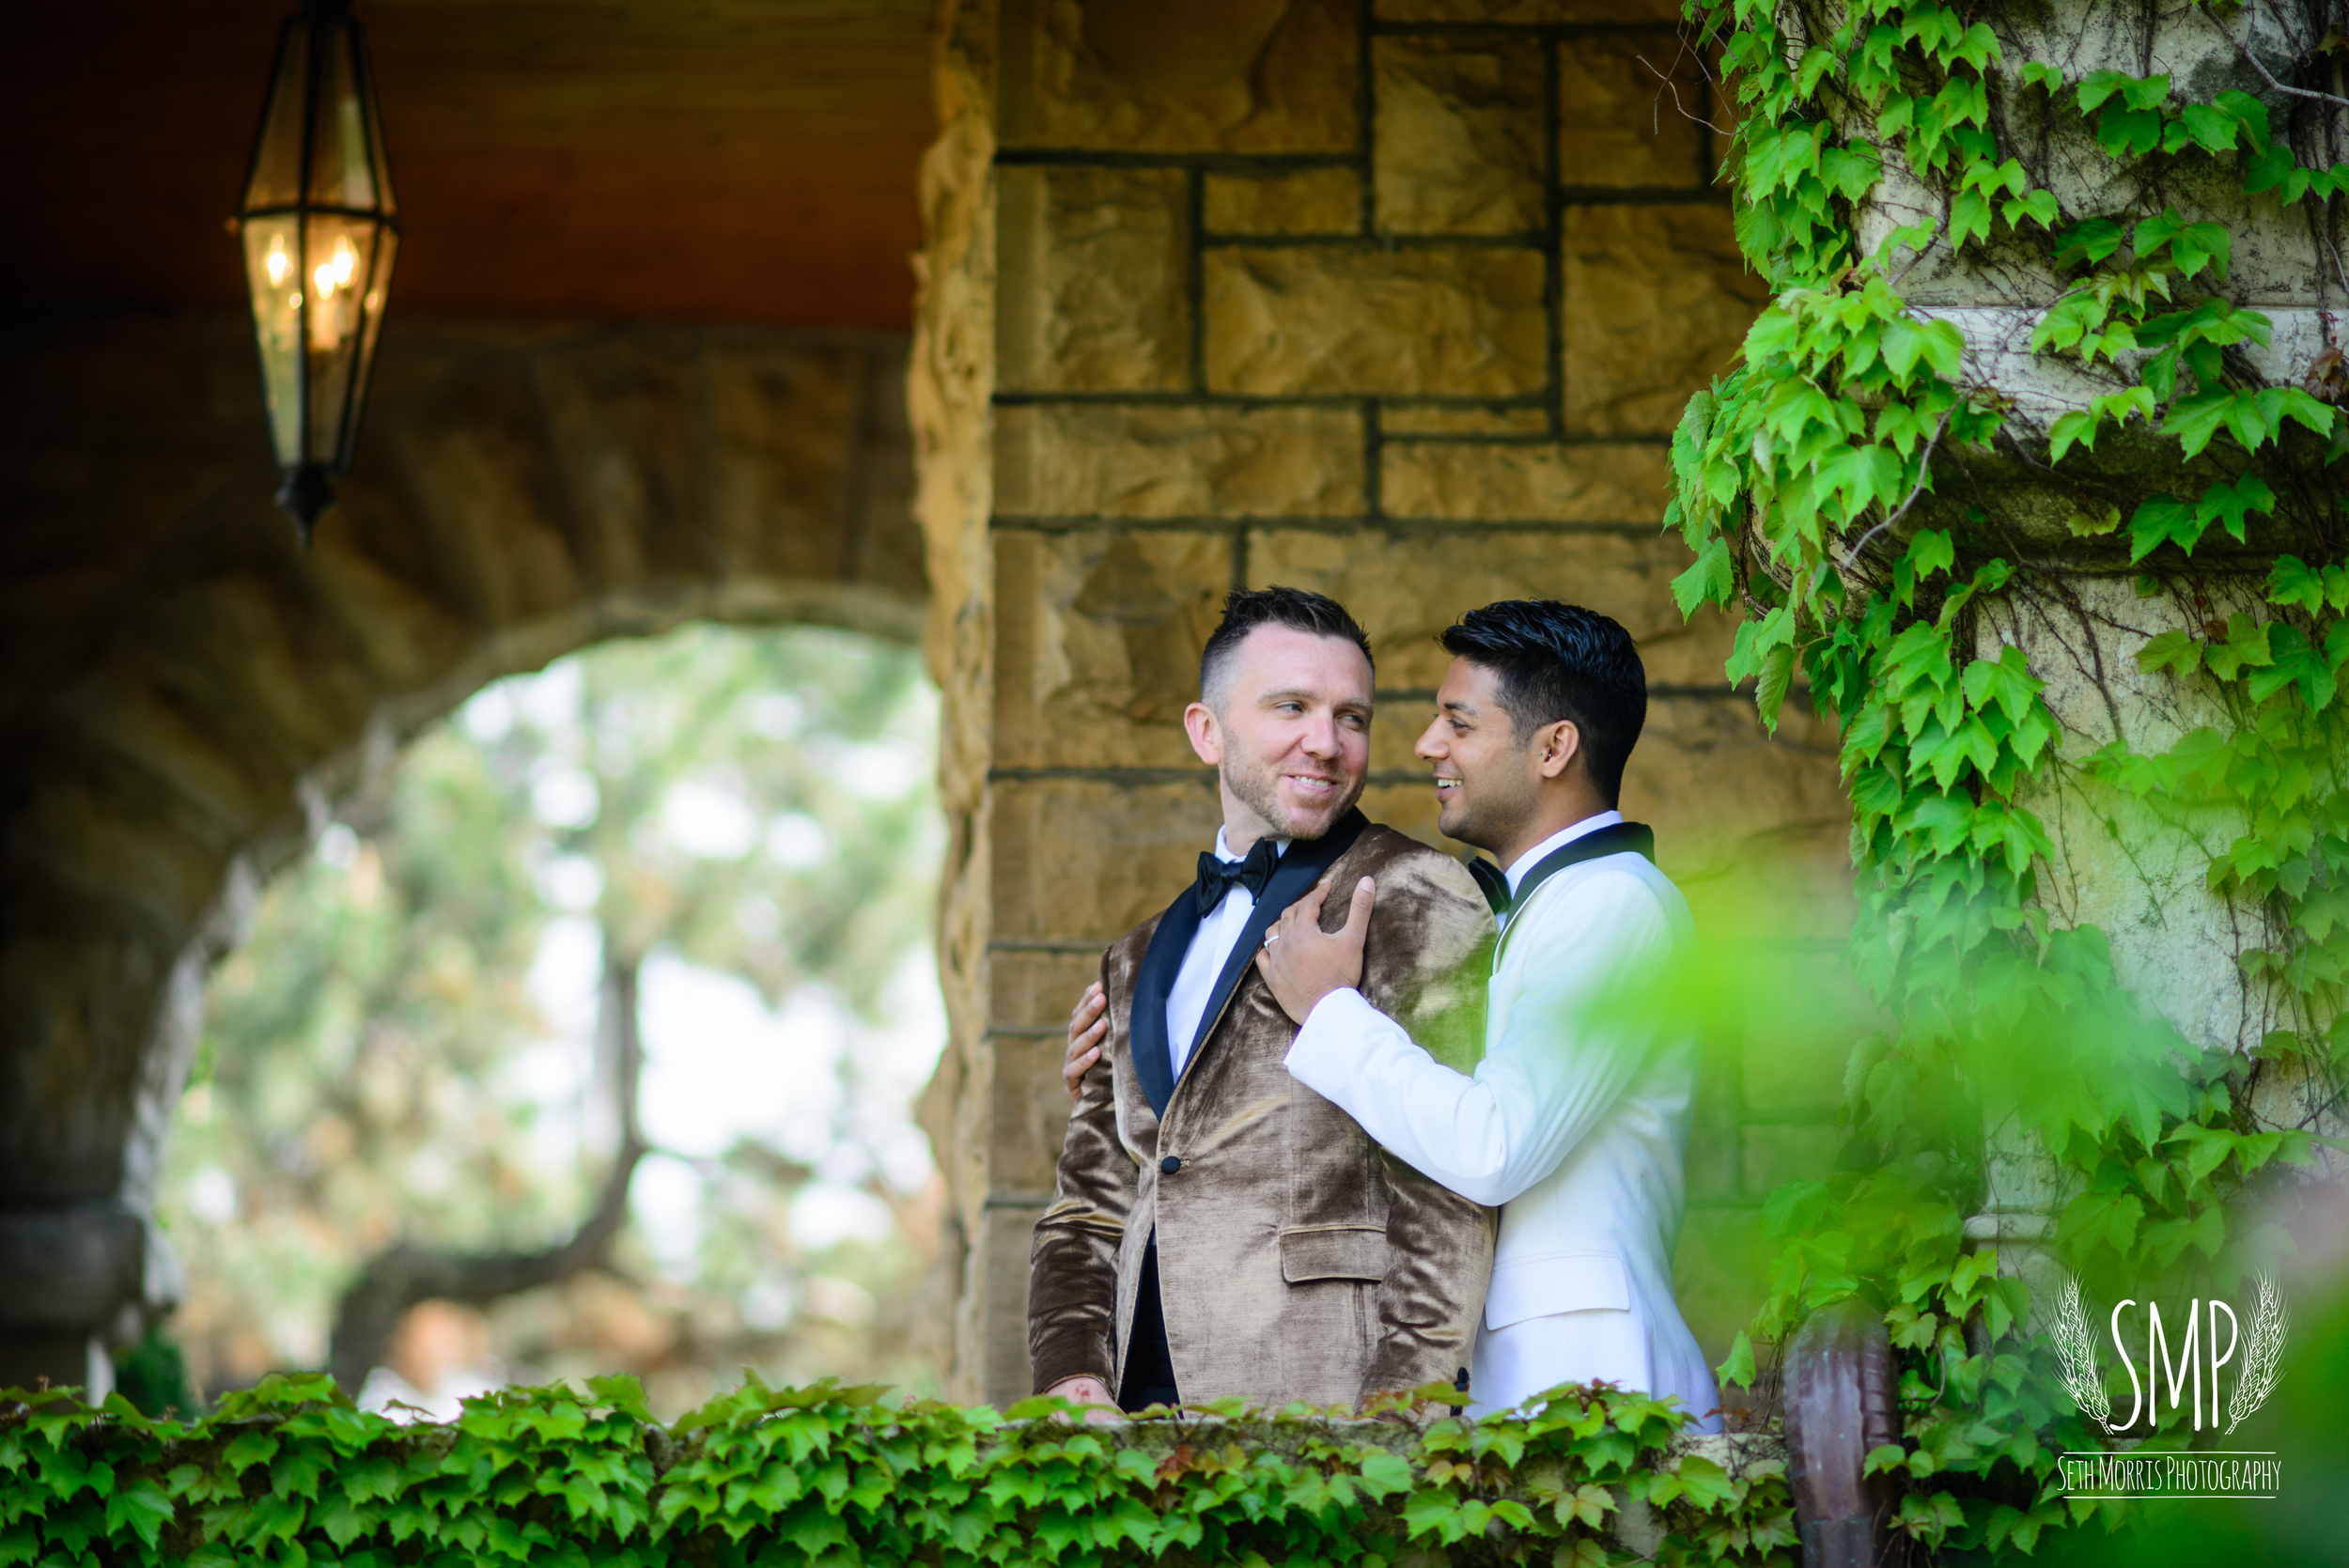 same-sex-wedding-photographer-chicago-illinois-12.jpg